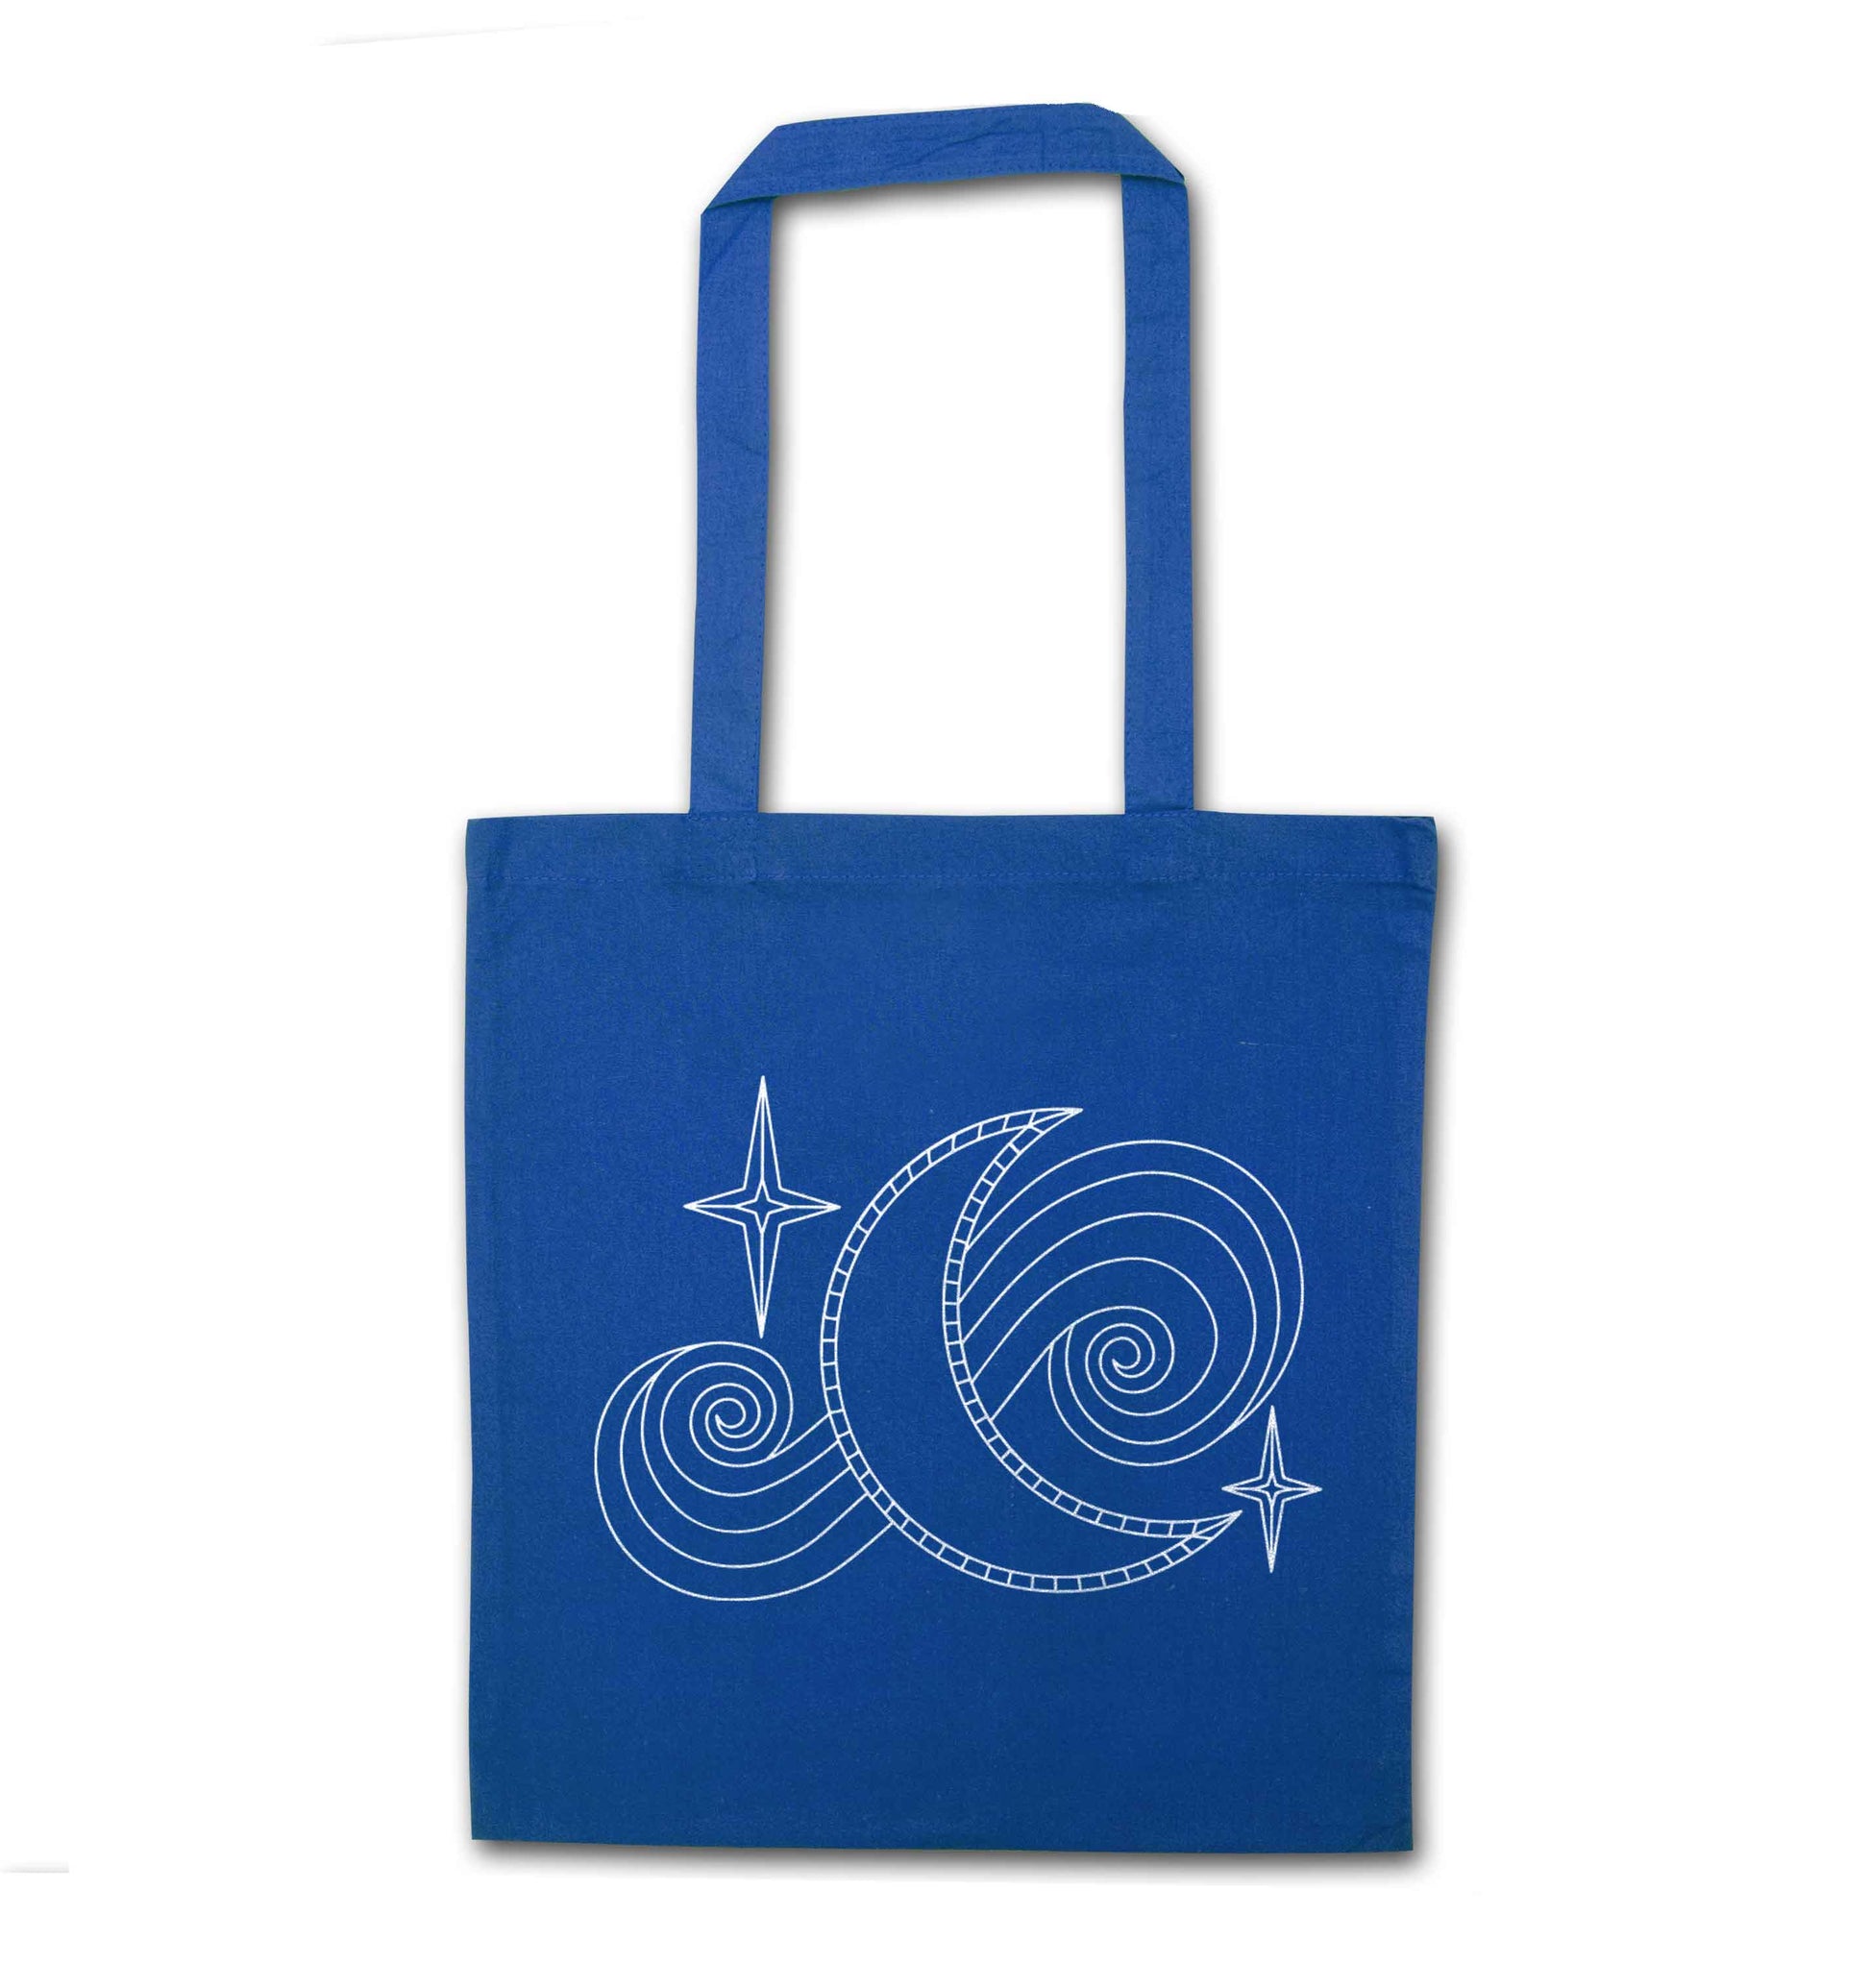 Moon and stars illustration blue tote bag